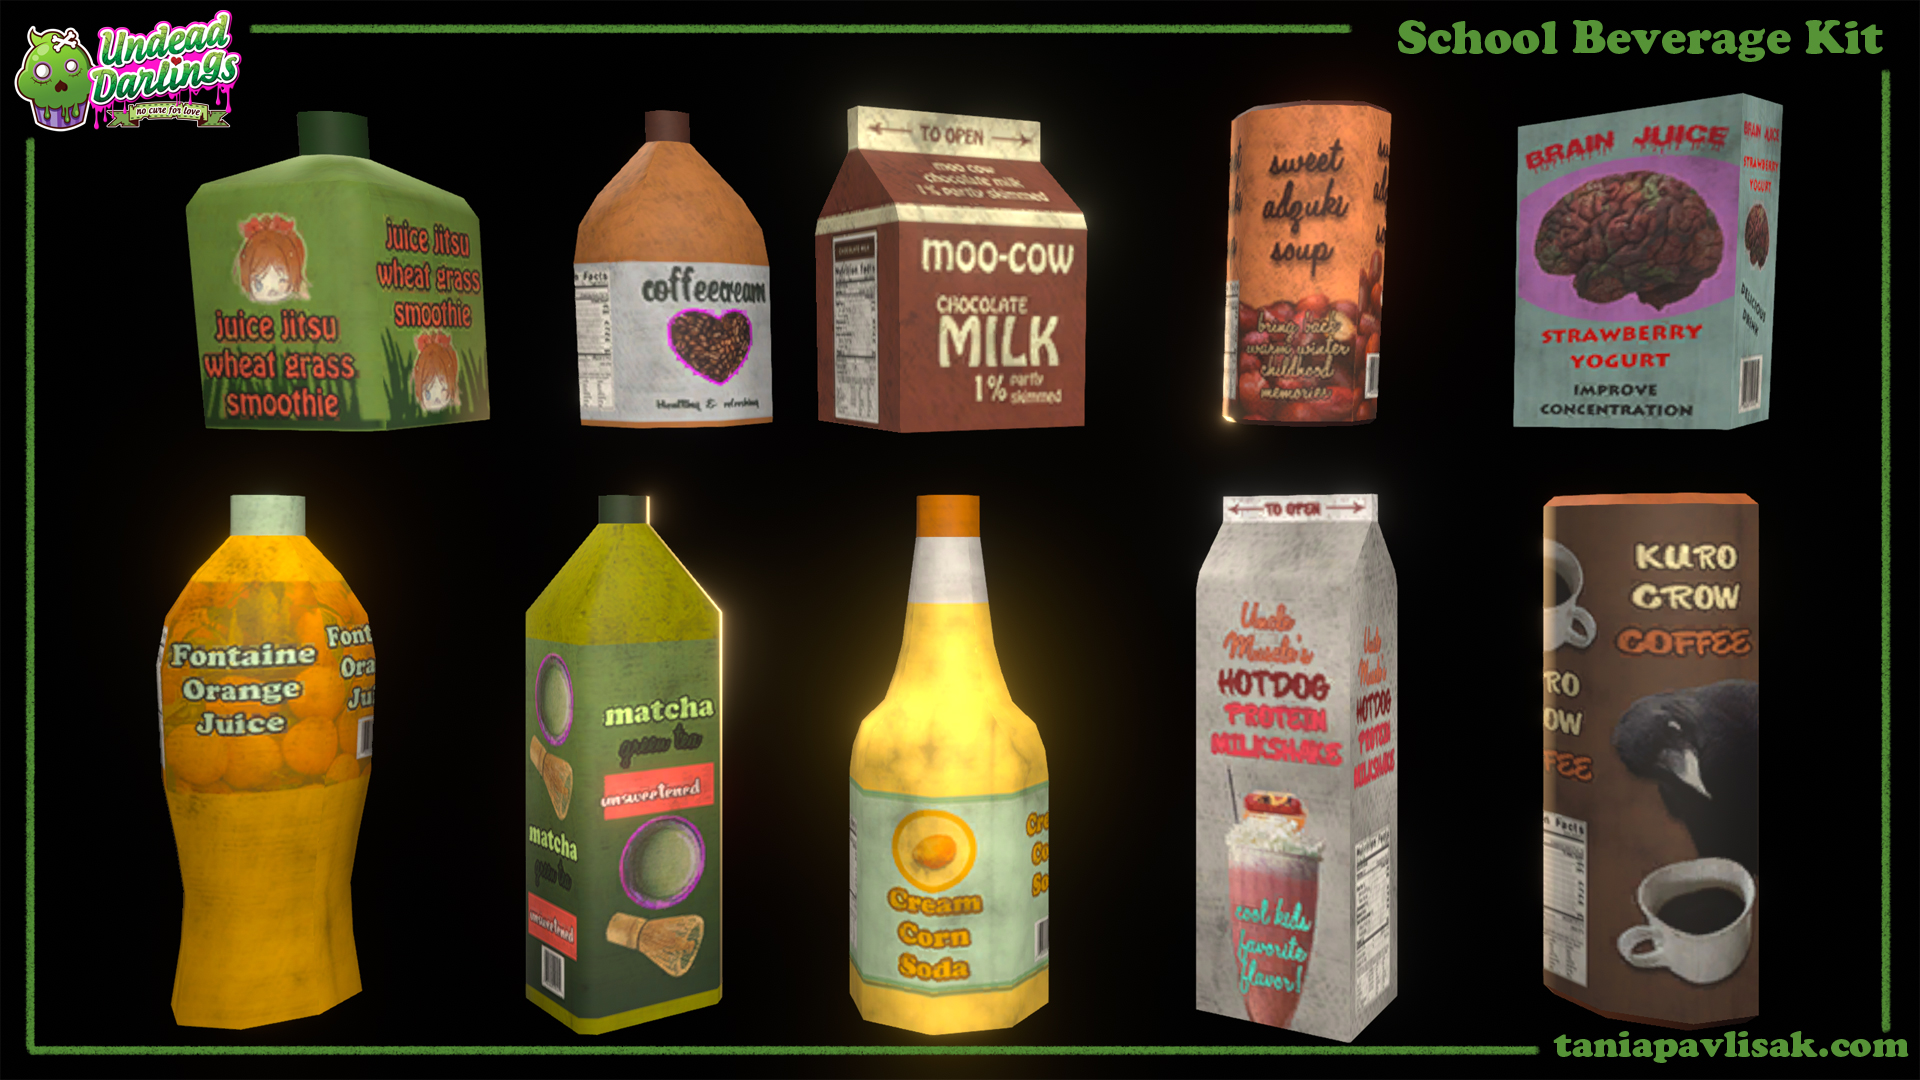 Various school beverages from vending machine